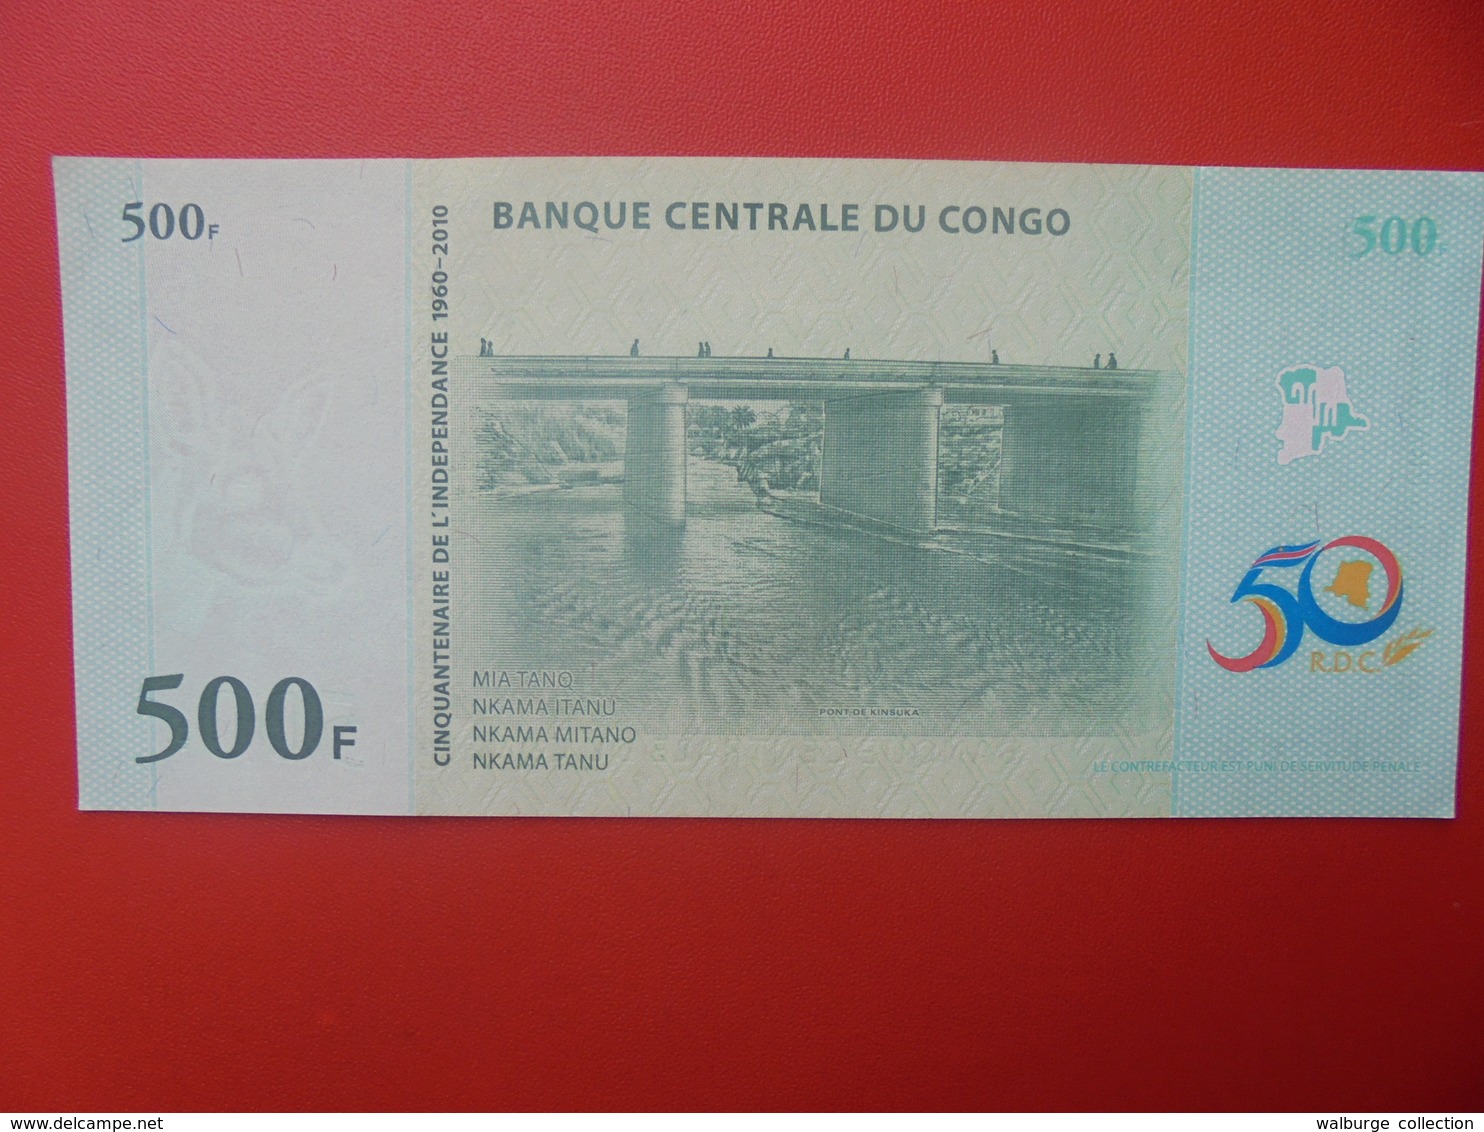 CONGO 500 FRANCS 2010 PEU CIRCULER (B.6) - Demokratische Republik Kongo & Zaire